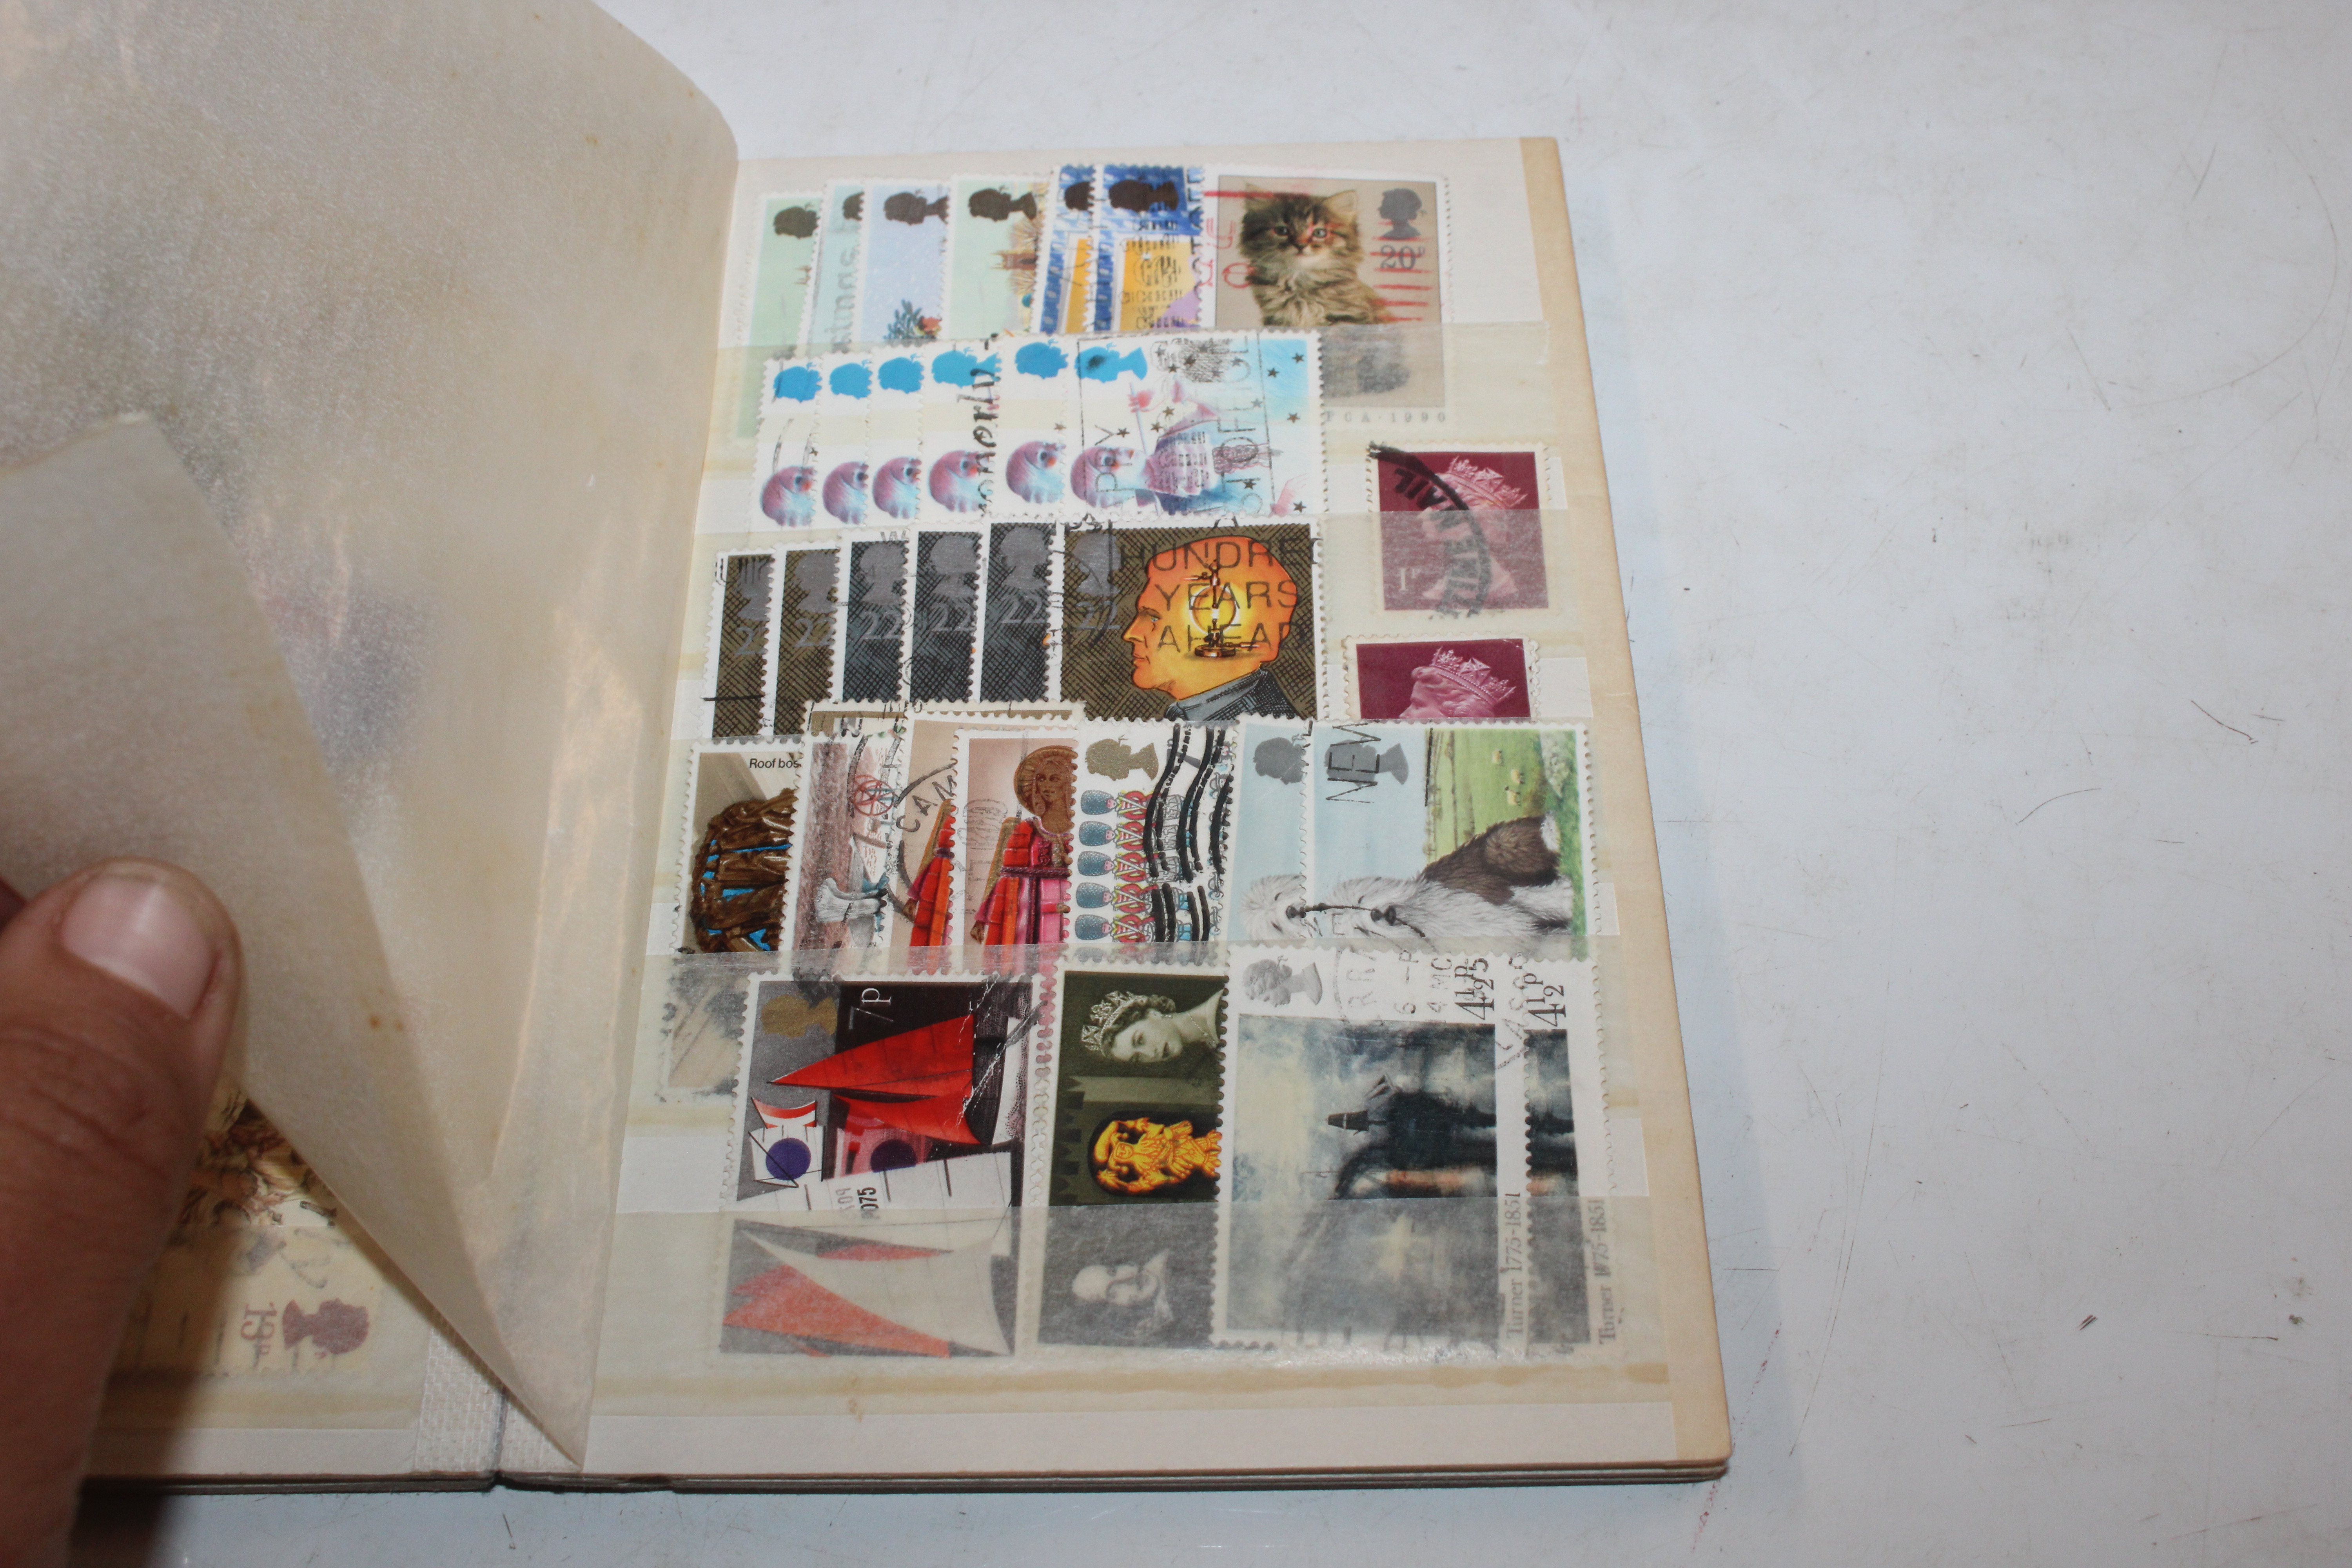 A box containing an album of stamps, various loose - Bild 27 aus 27